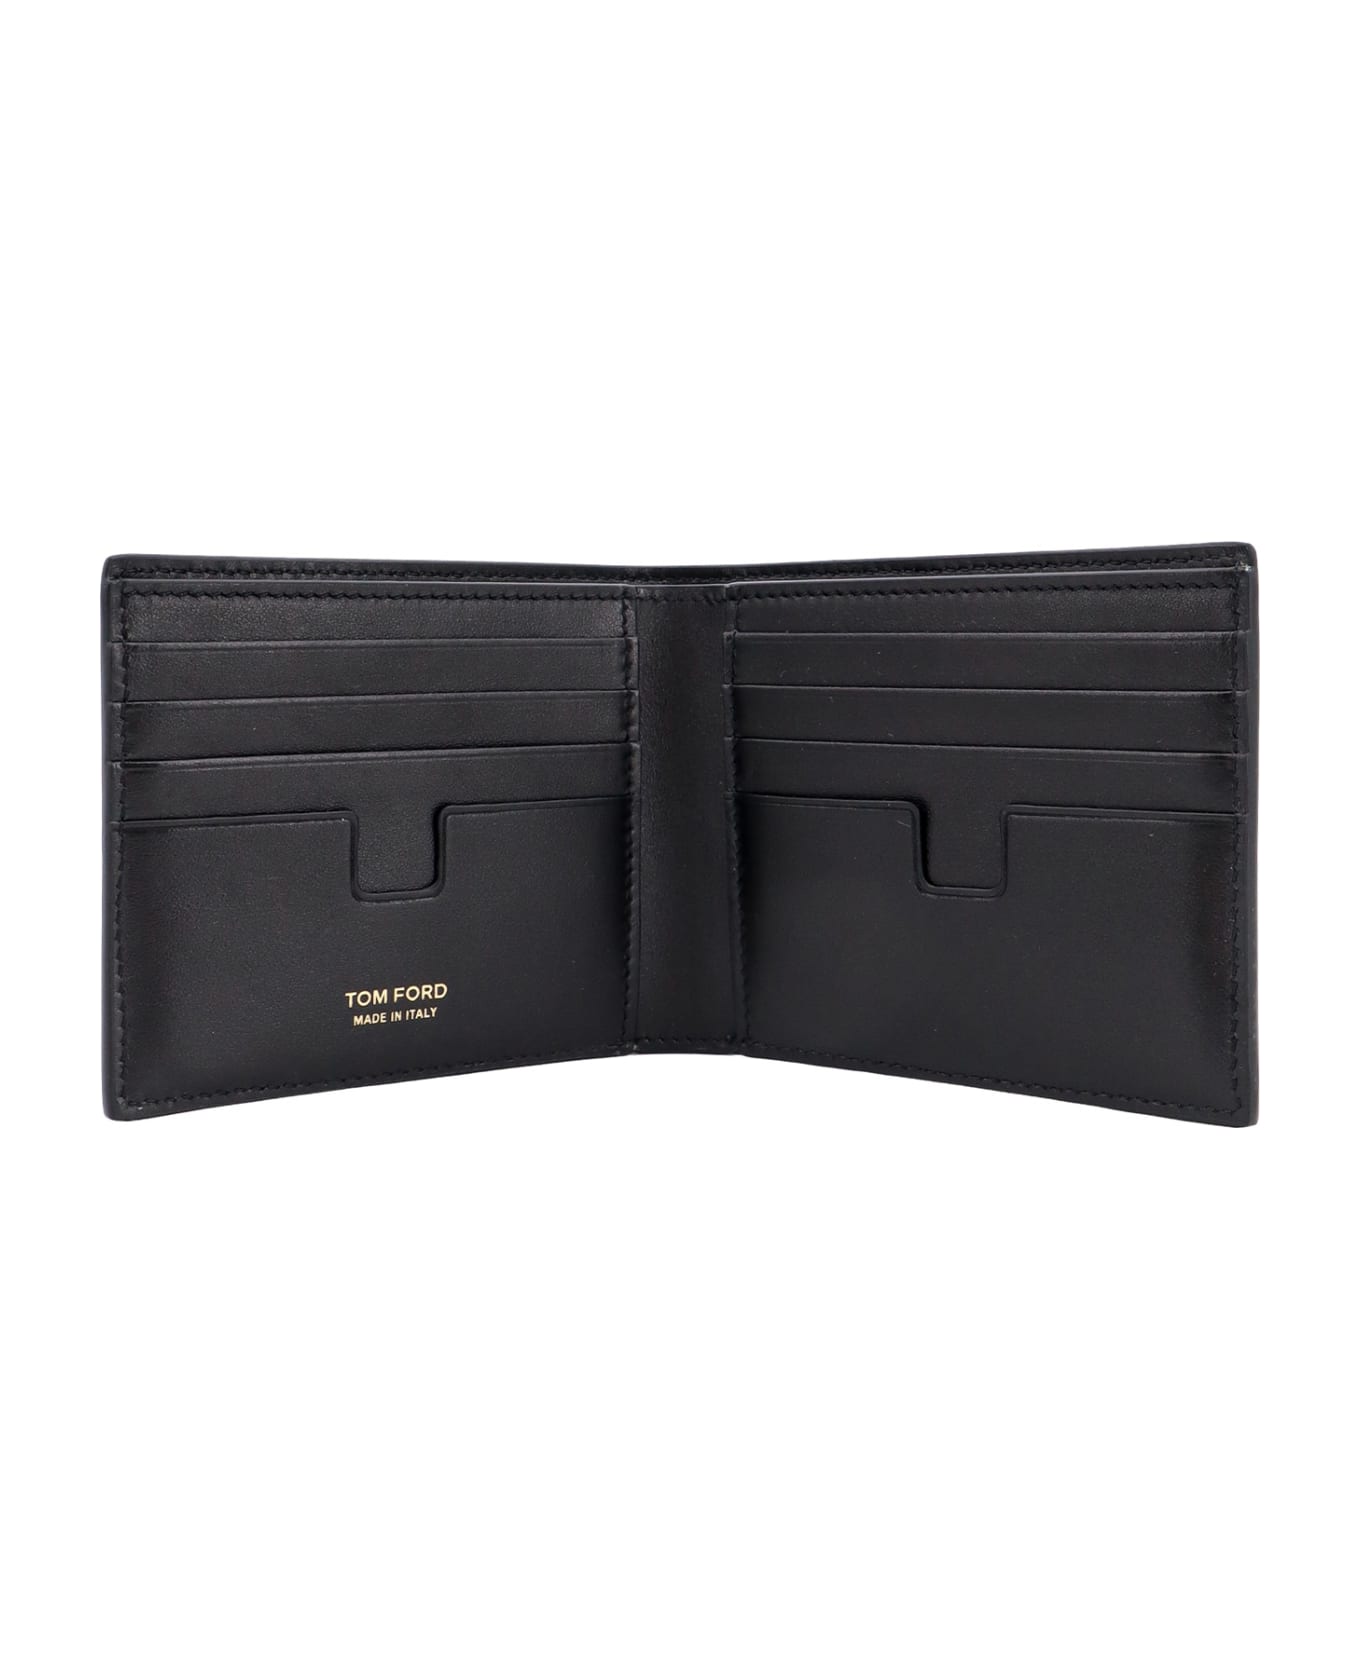 Tom Ford Wallet - Black 財布